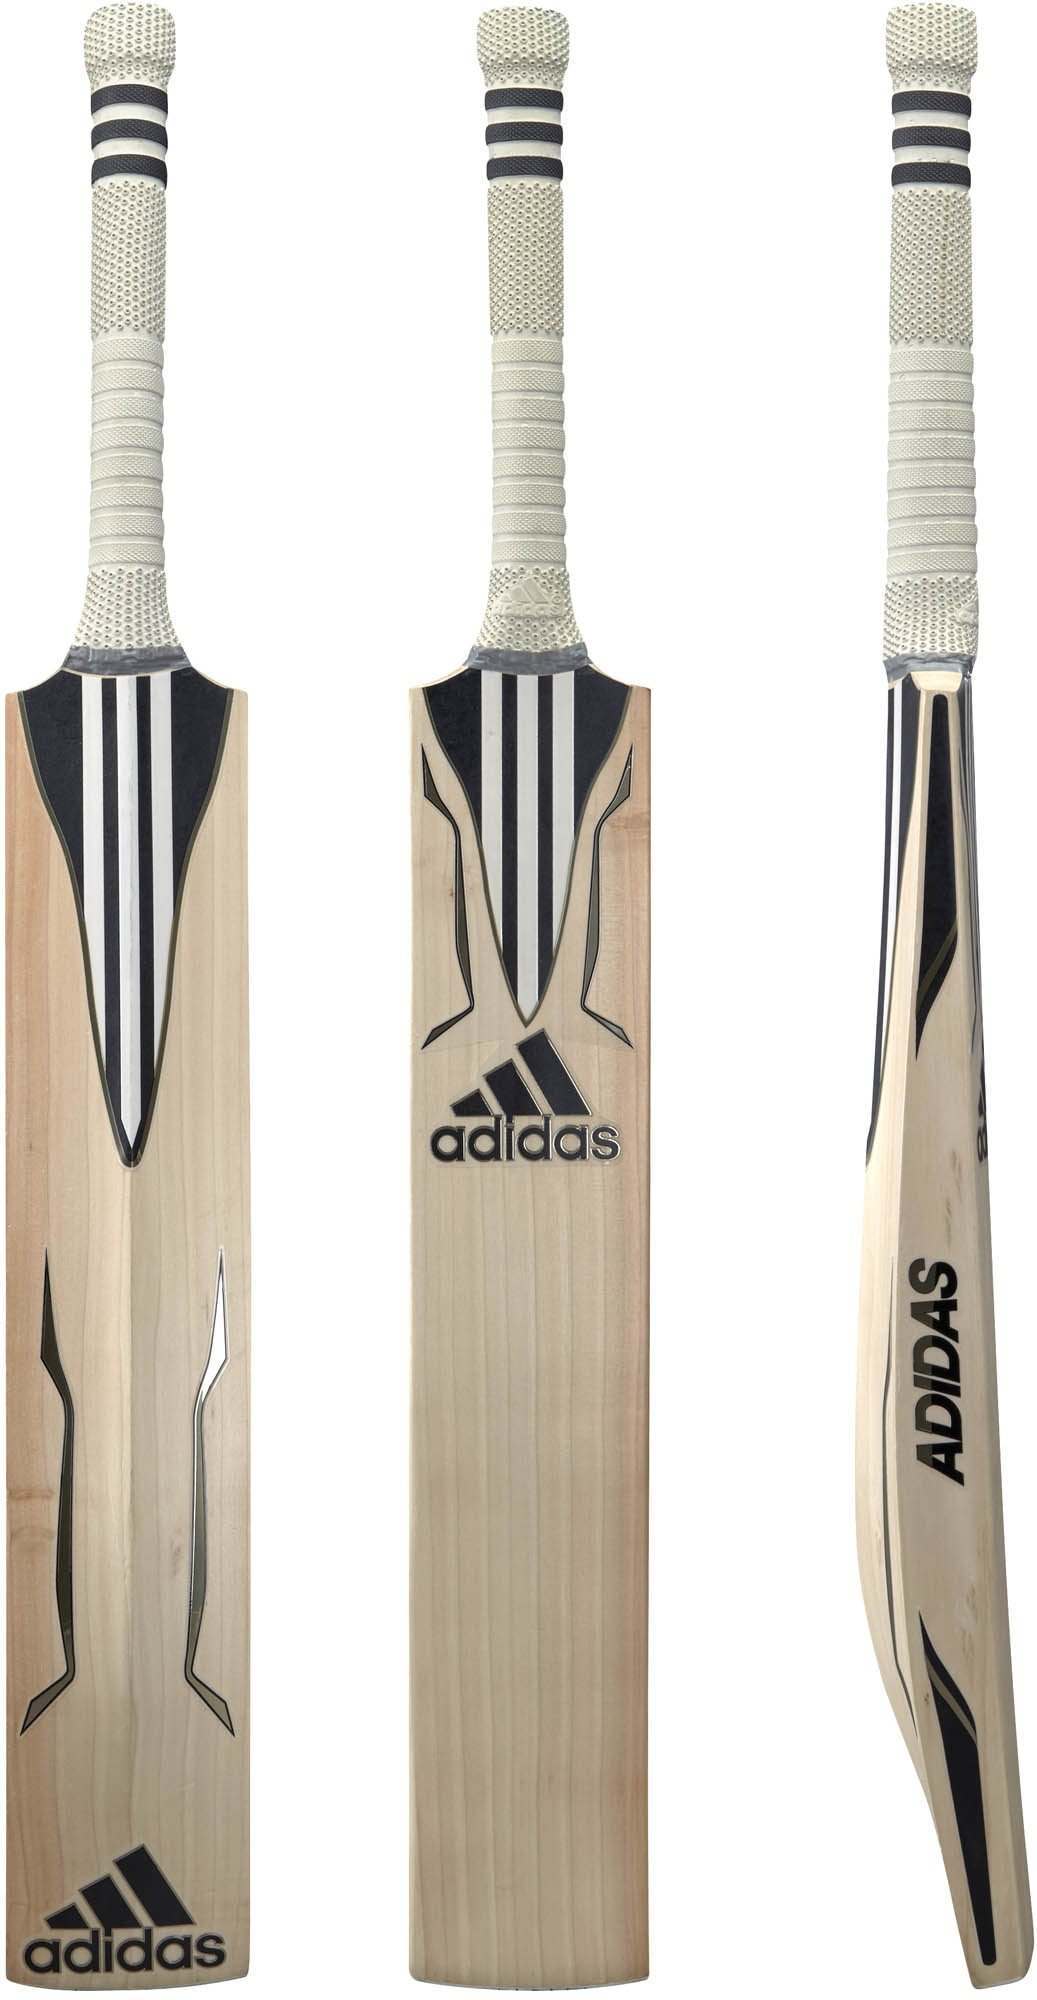 Adidas Cricket Bat Logo - Adidas XT Club Junior Cricket Bat Rounder Cricket